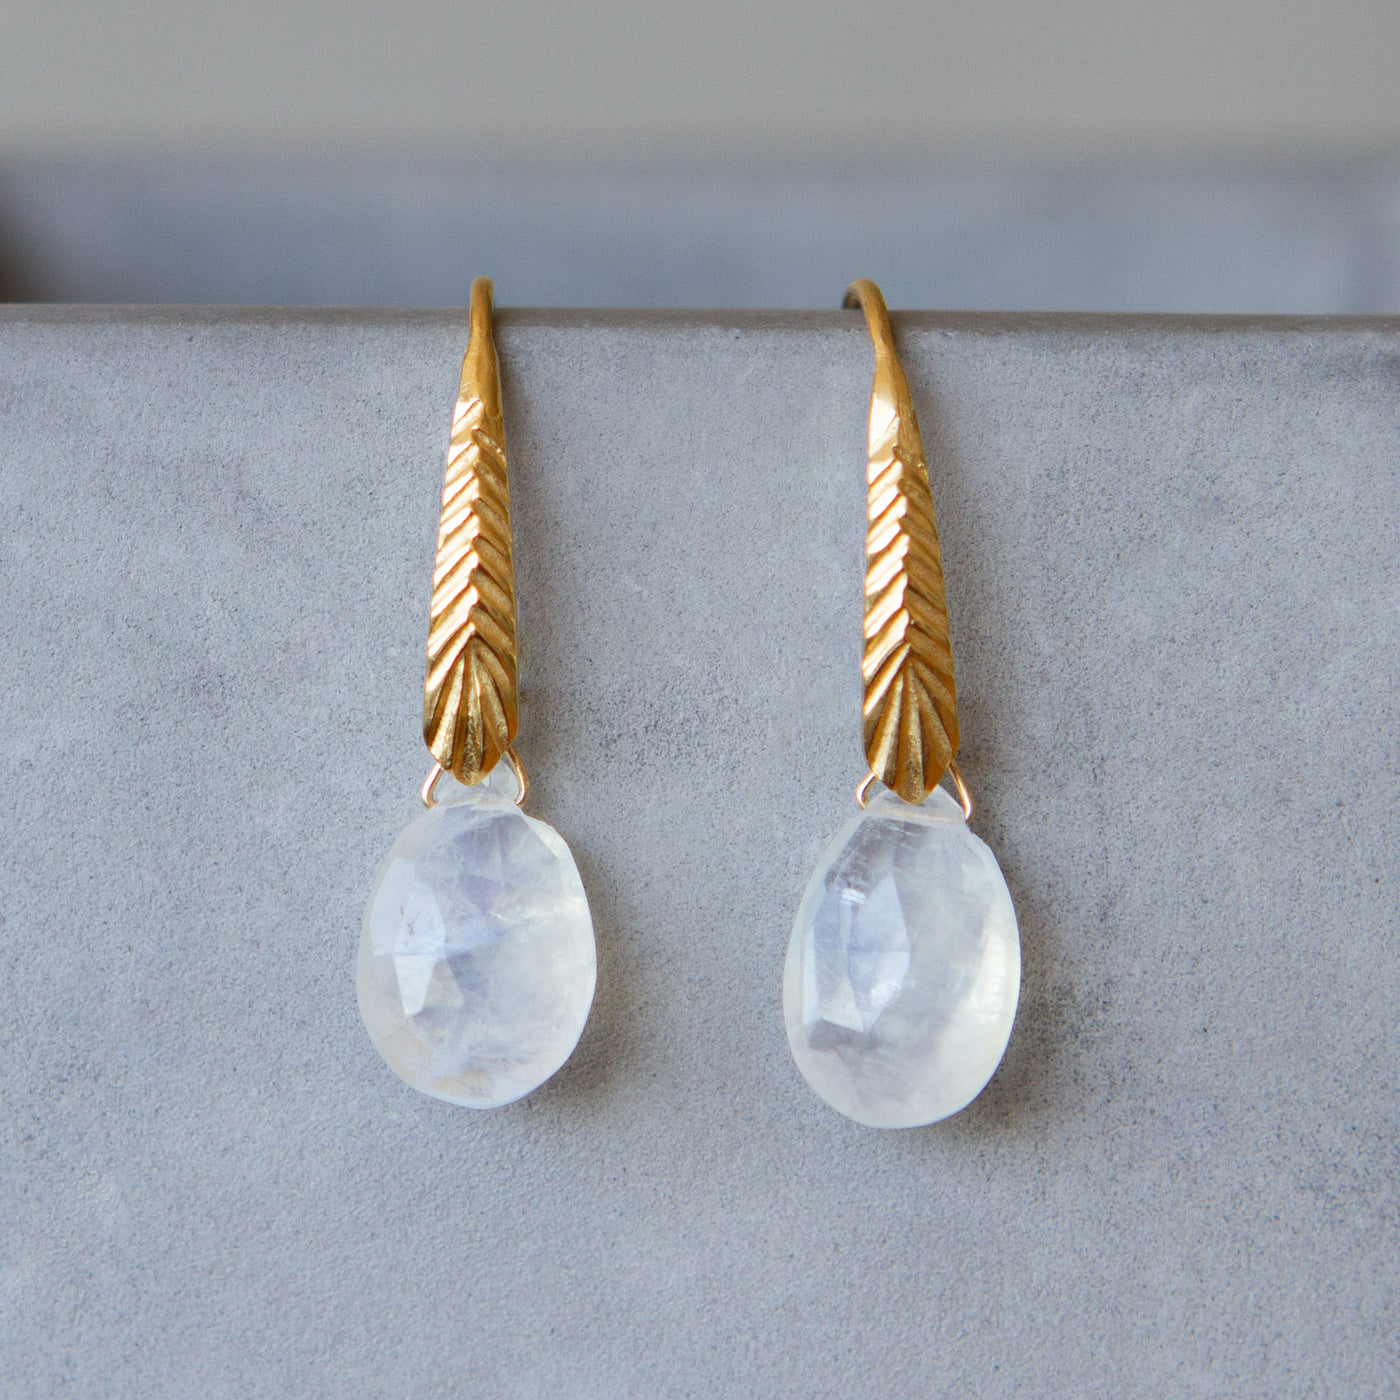 Vermeil Herringbone dangle earrings with pear shape moonstone drops